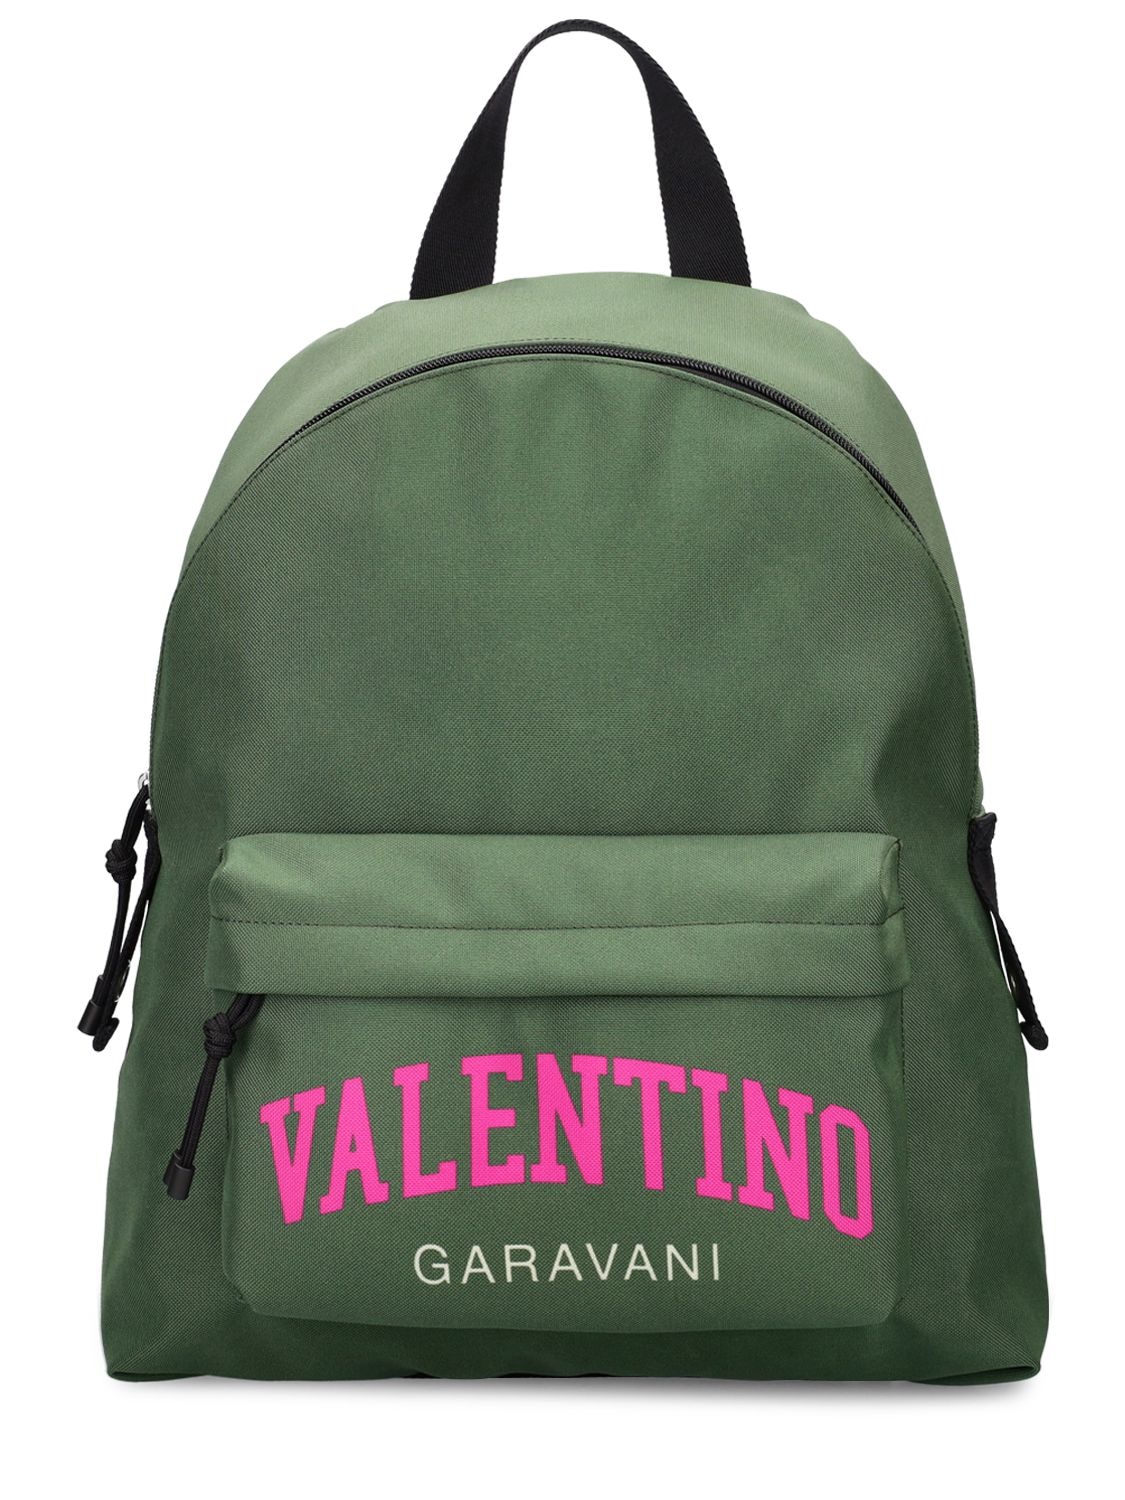 University Backpack - VALENTINO GARAVANI - Modalova